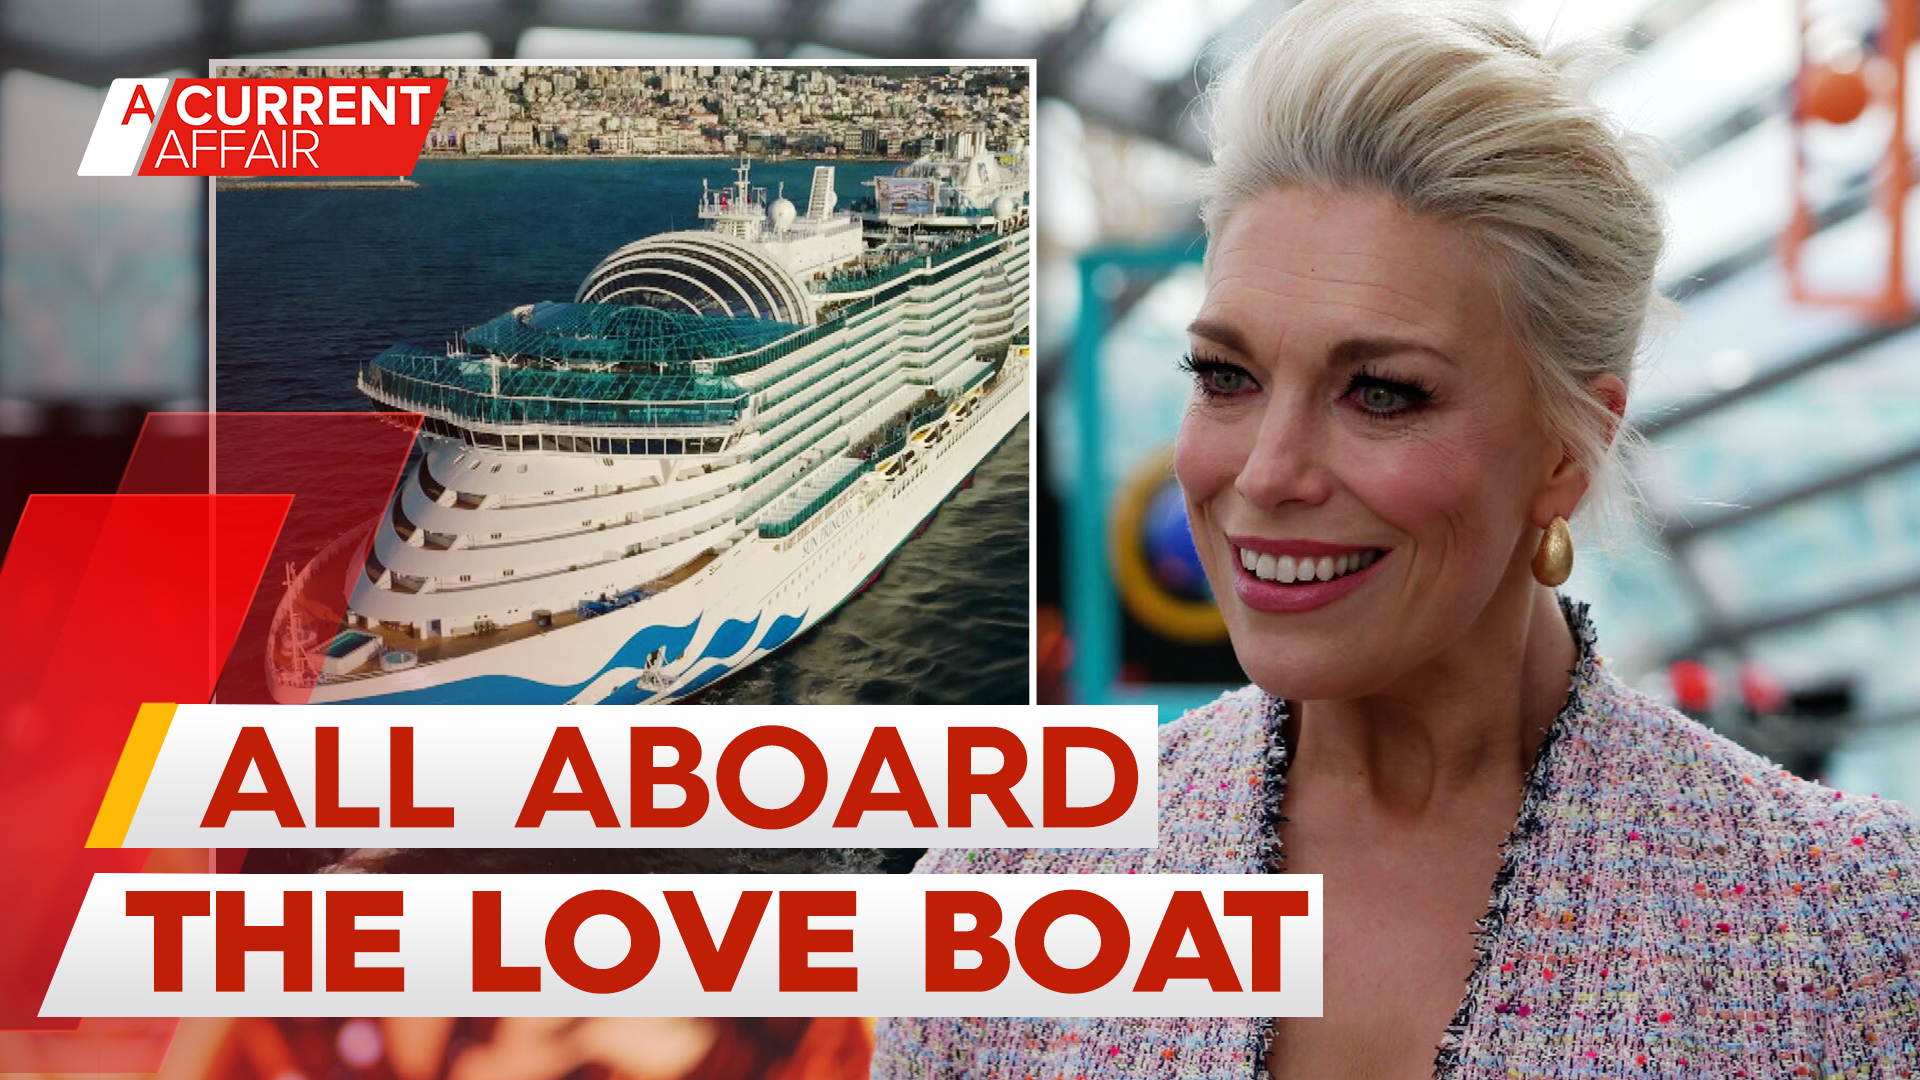 UK star actress' reaction to joining elite class as ship's godmother